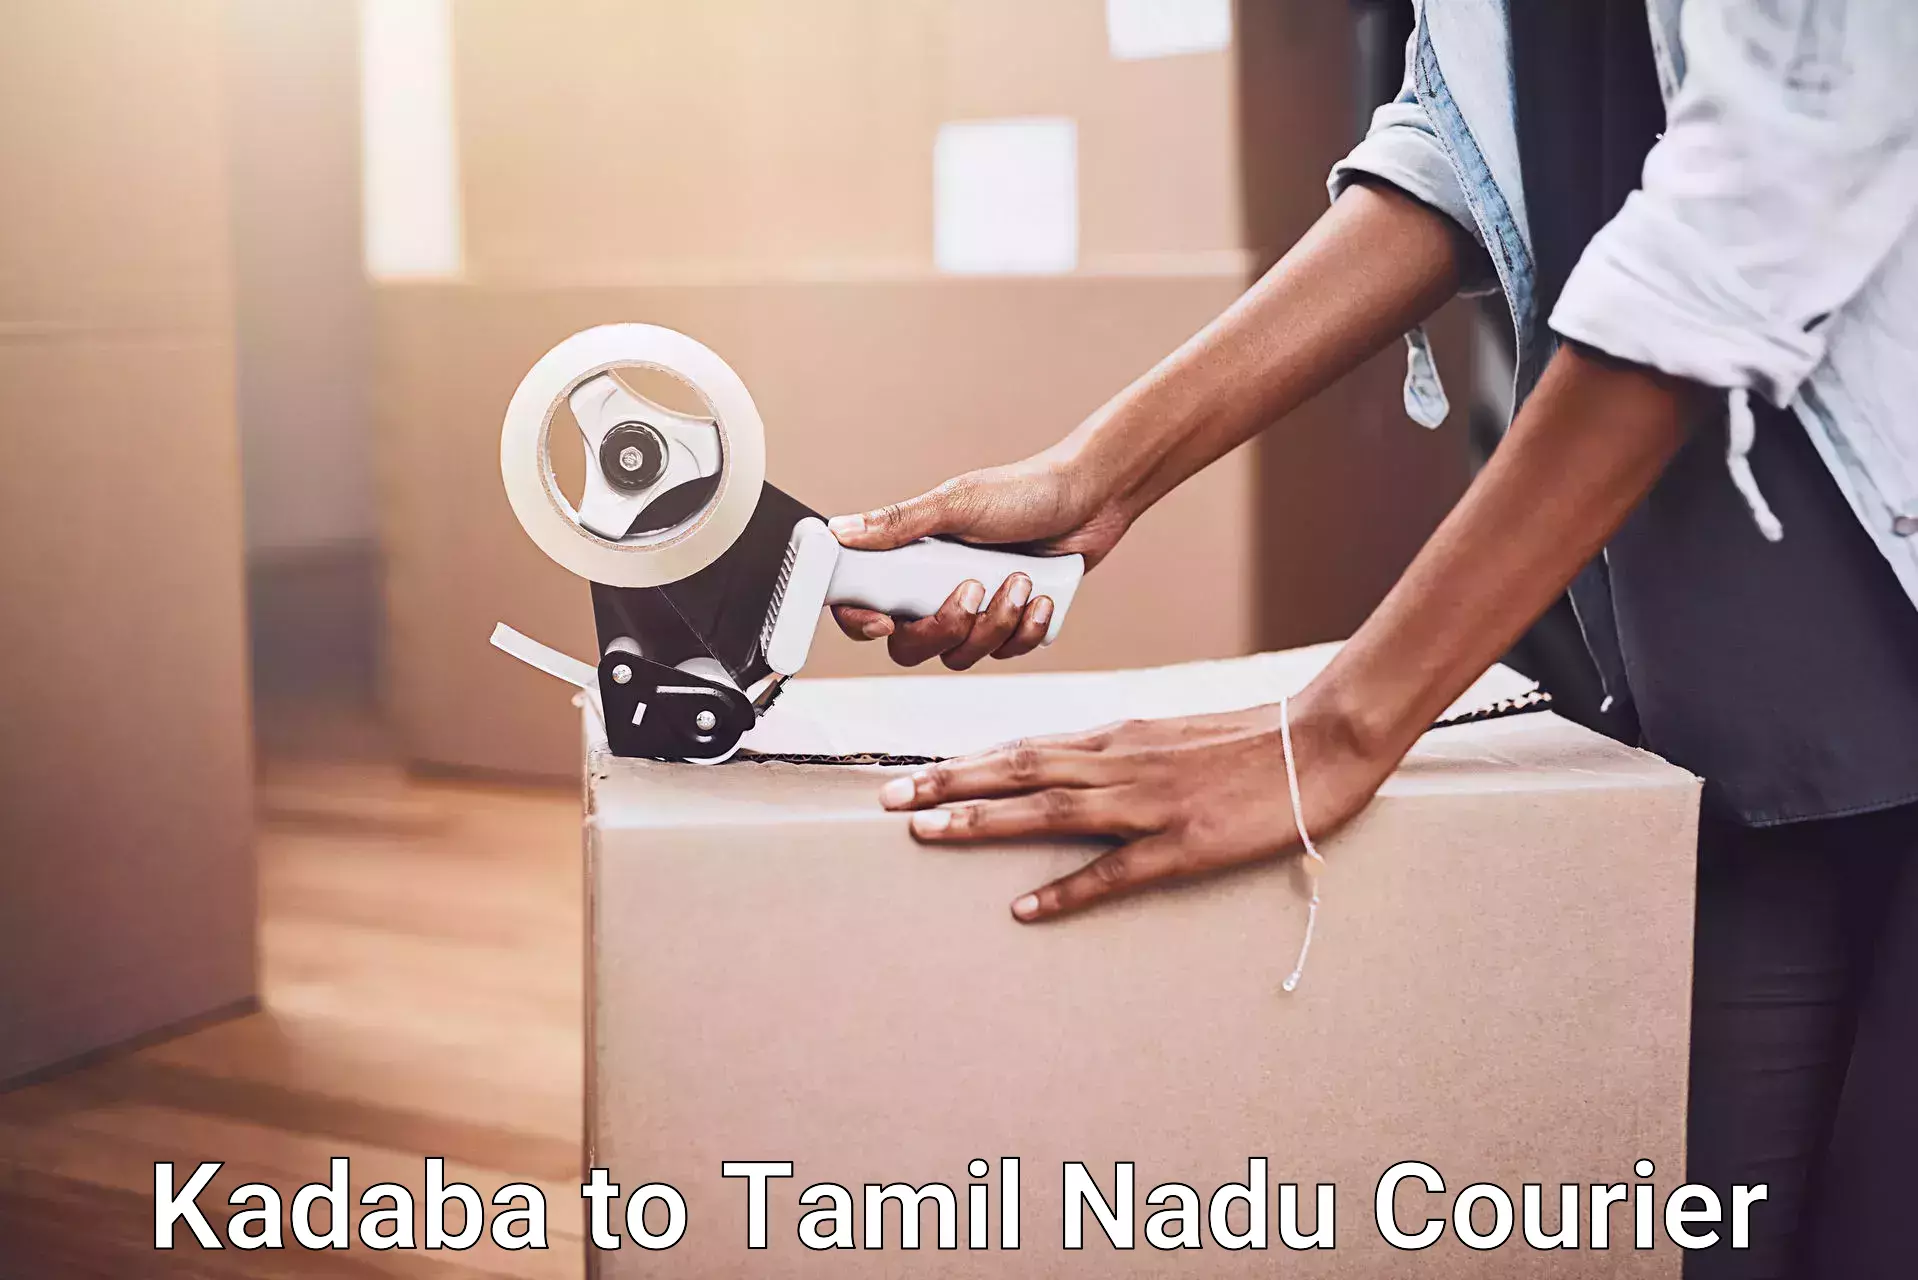 Quality moving company Kadaba to Tamil Nadu